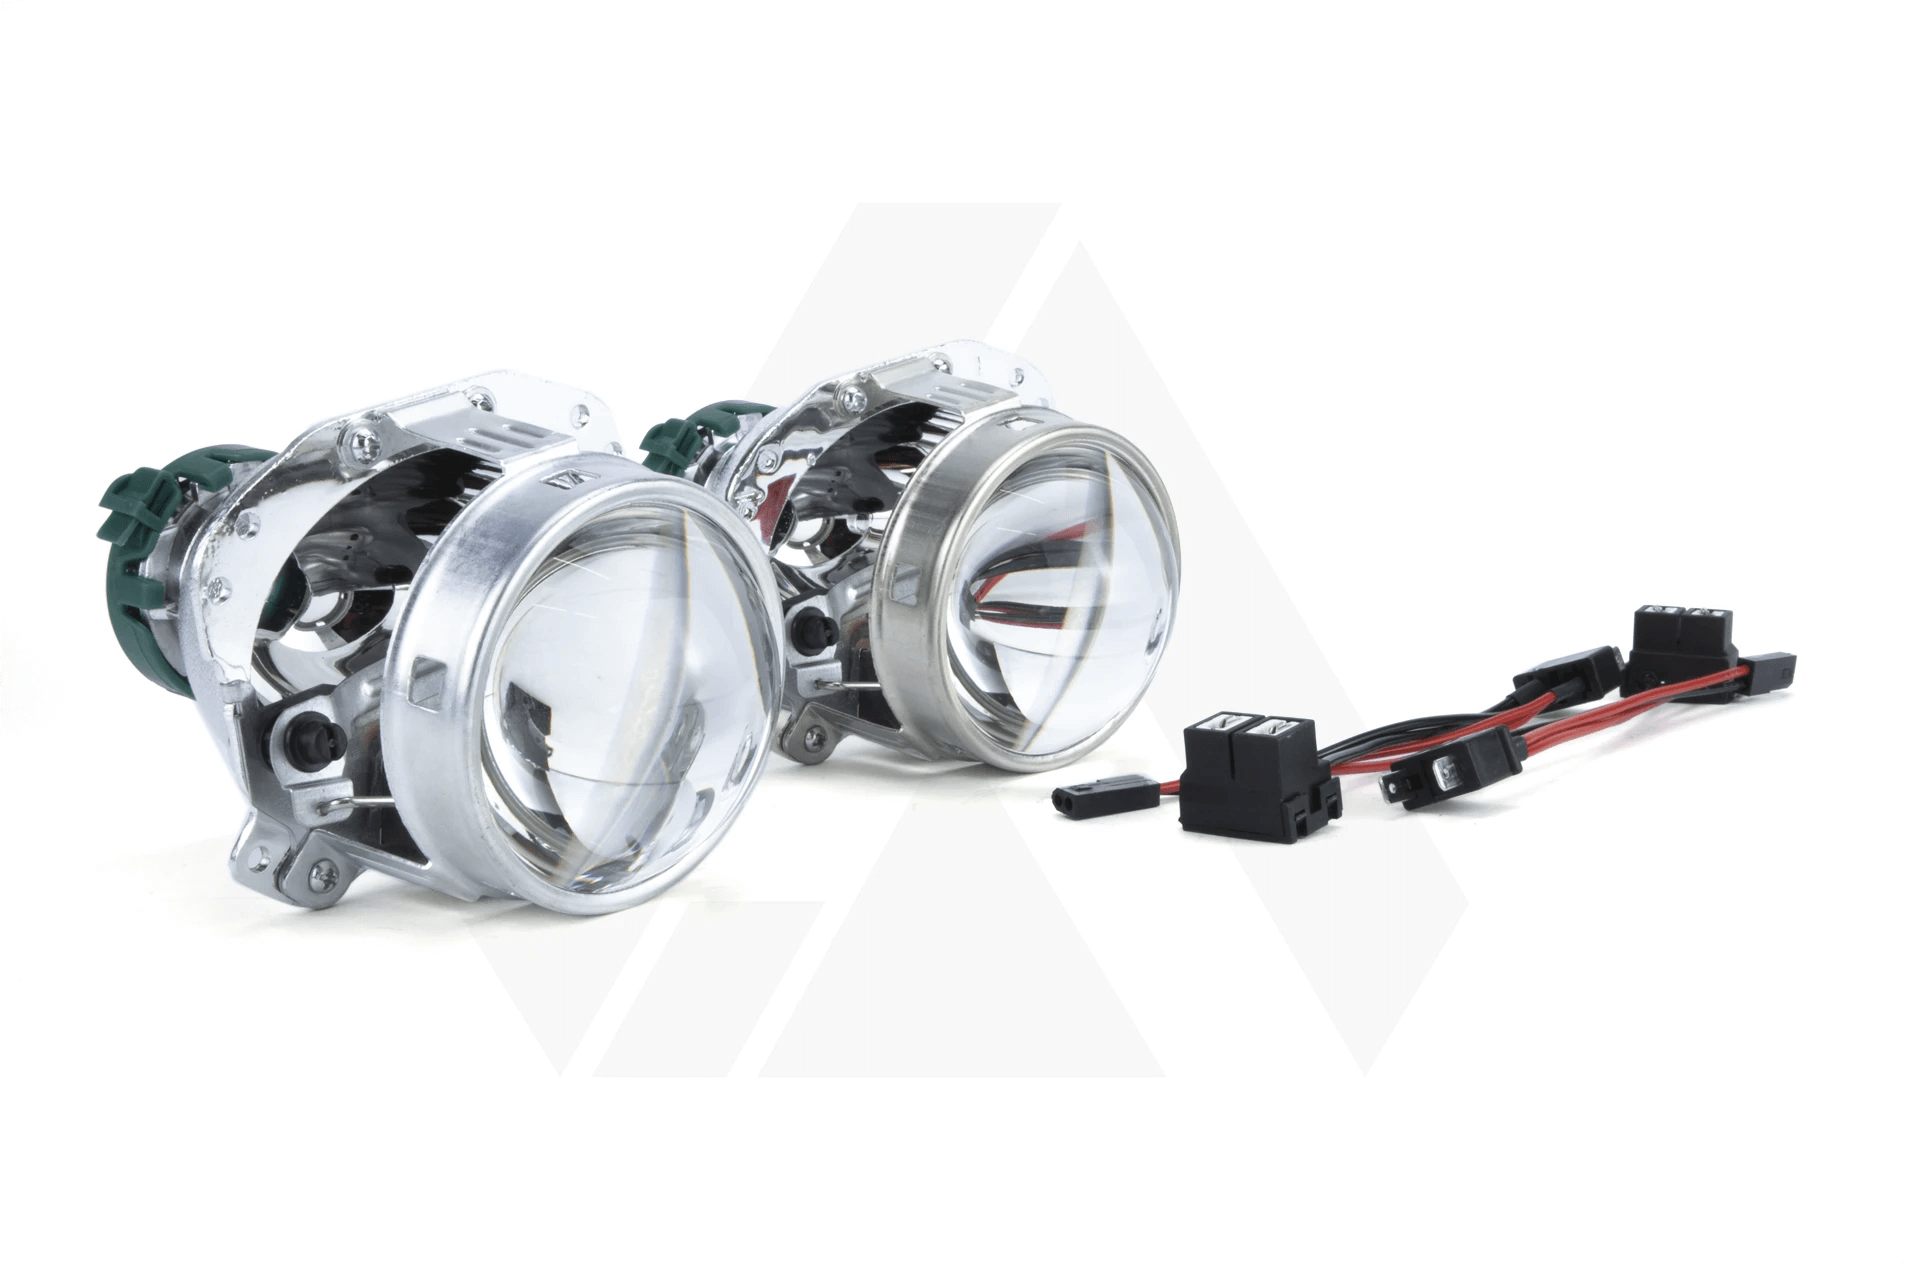 Opel Astra H 04-09 bi-xenon HID projector headlight repair & upgrade kit